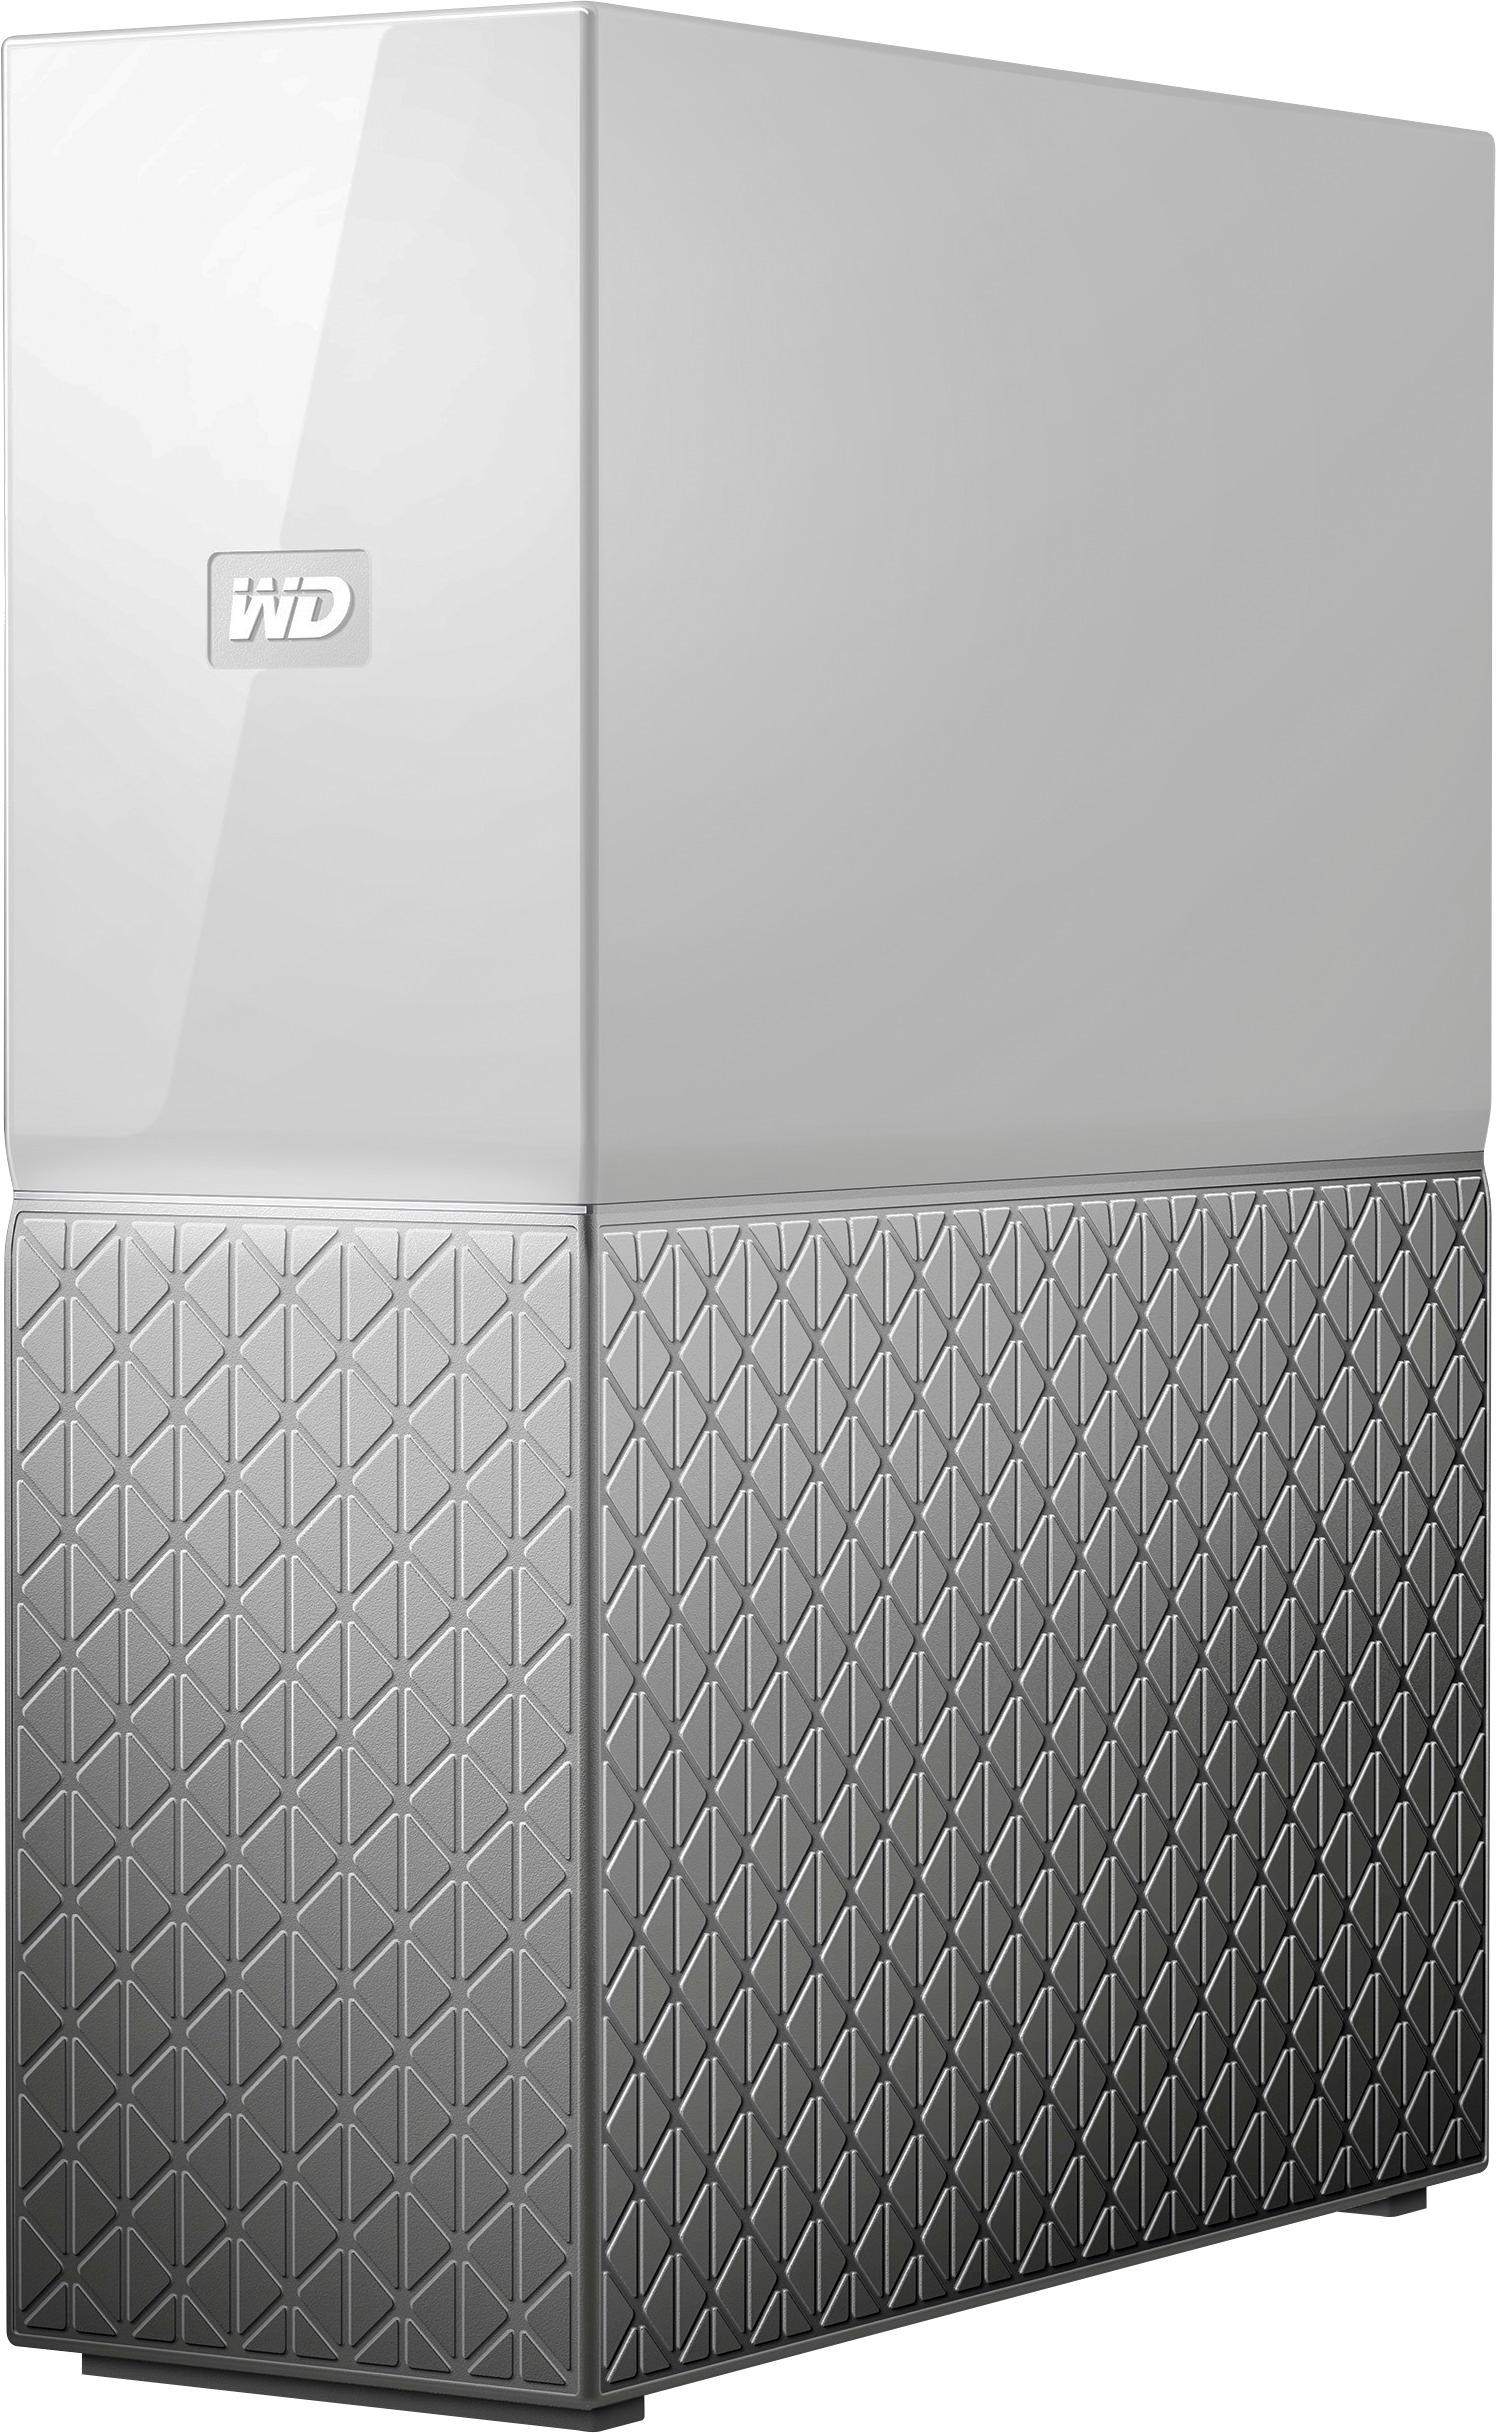 Angle View: WD - easystore 480GB Internal SSD SATA